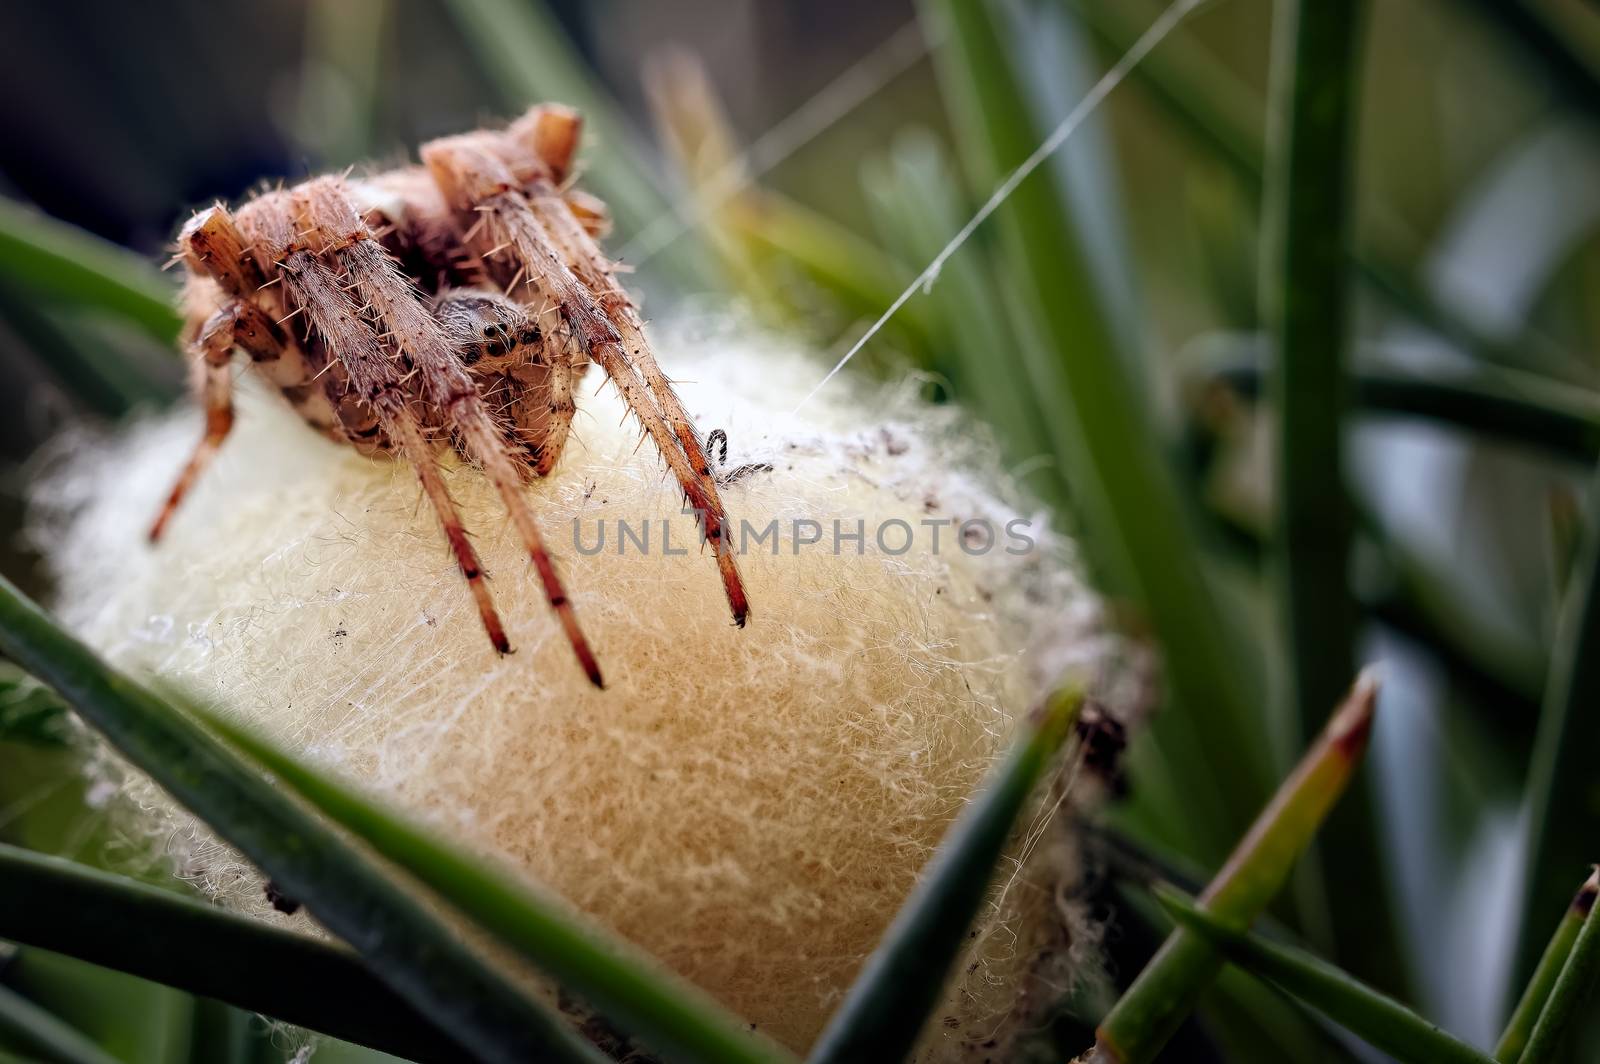 A photograph showing a common garden spider (Araneus diadematus) guarding her recently laid eggs.